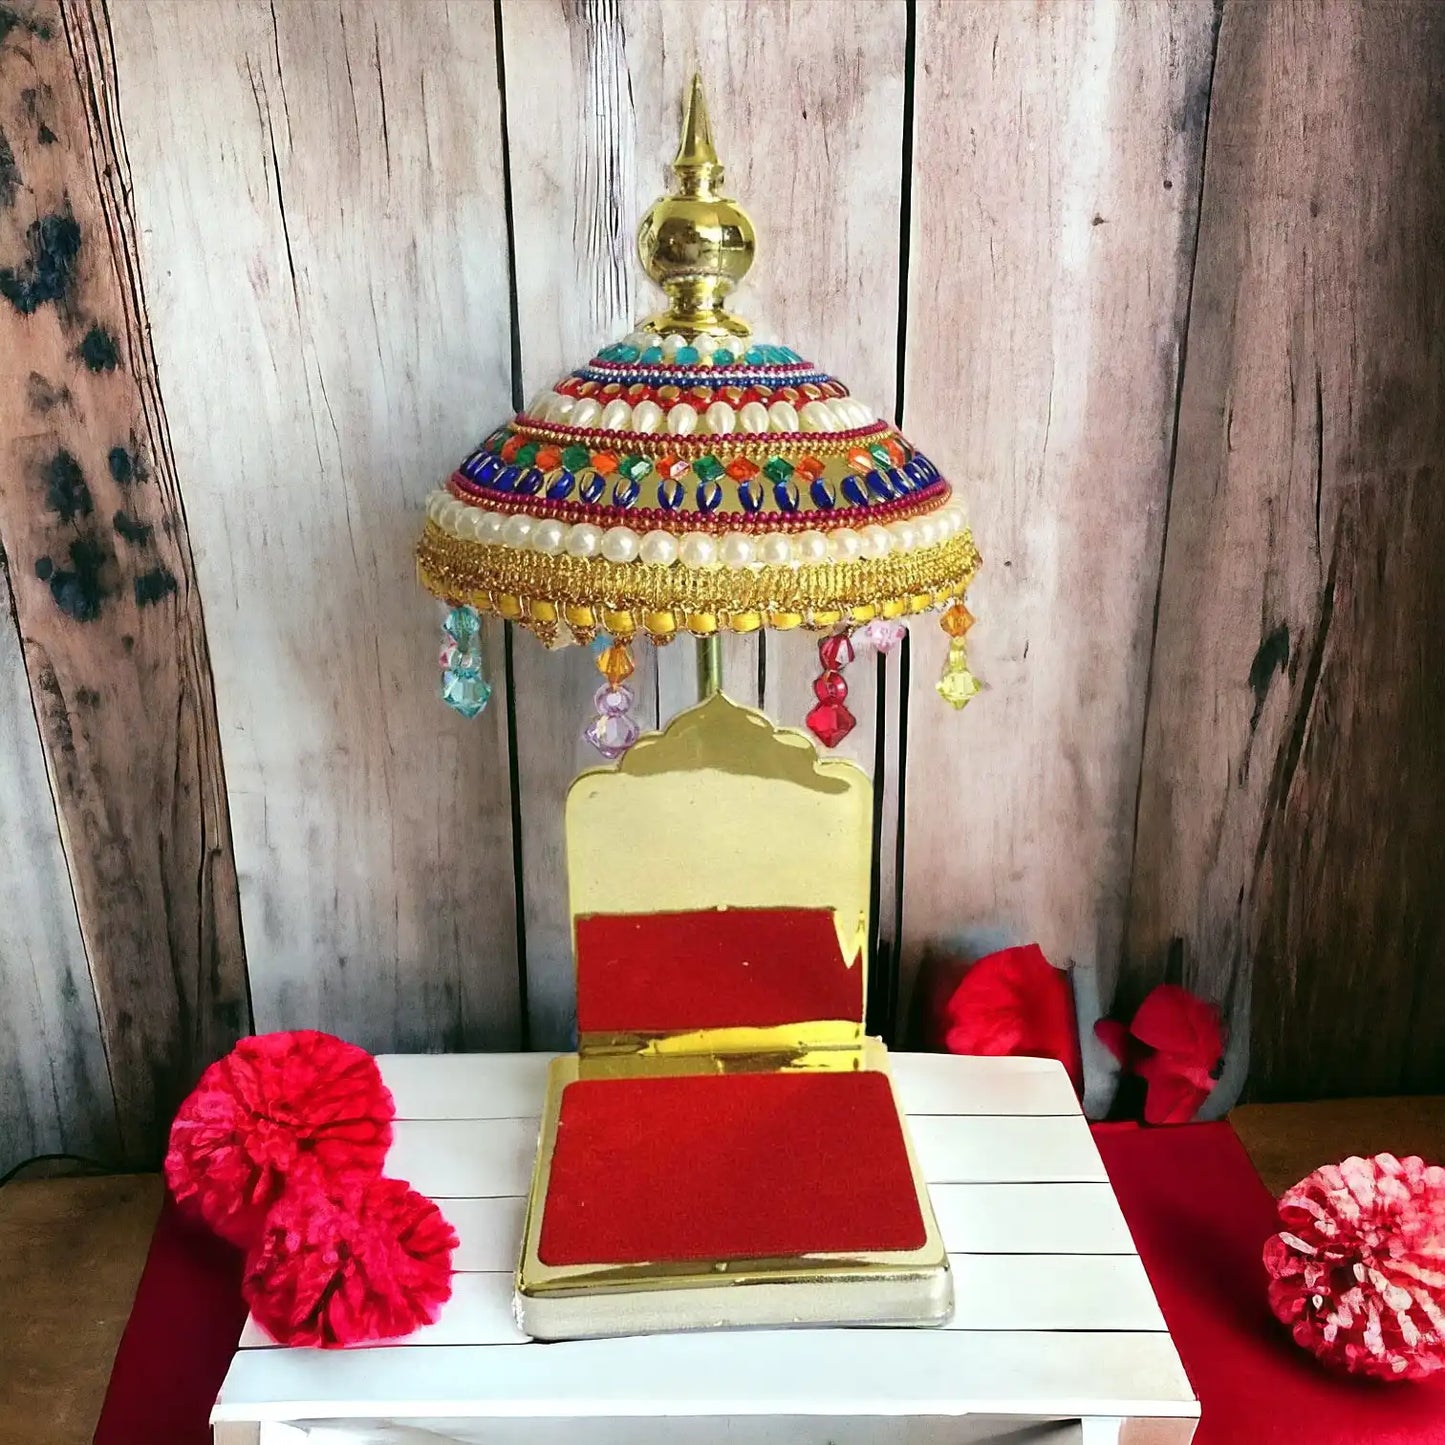 Laddu Gopal Ji Umbrella Singhasan | Umbrella/chatra for God Laddu Gopal Lord Thakur Ji